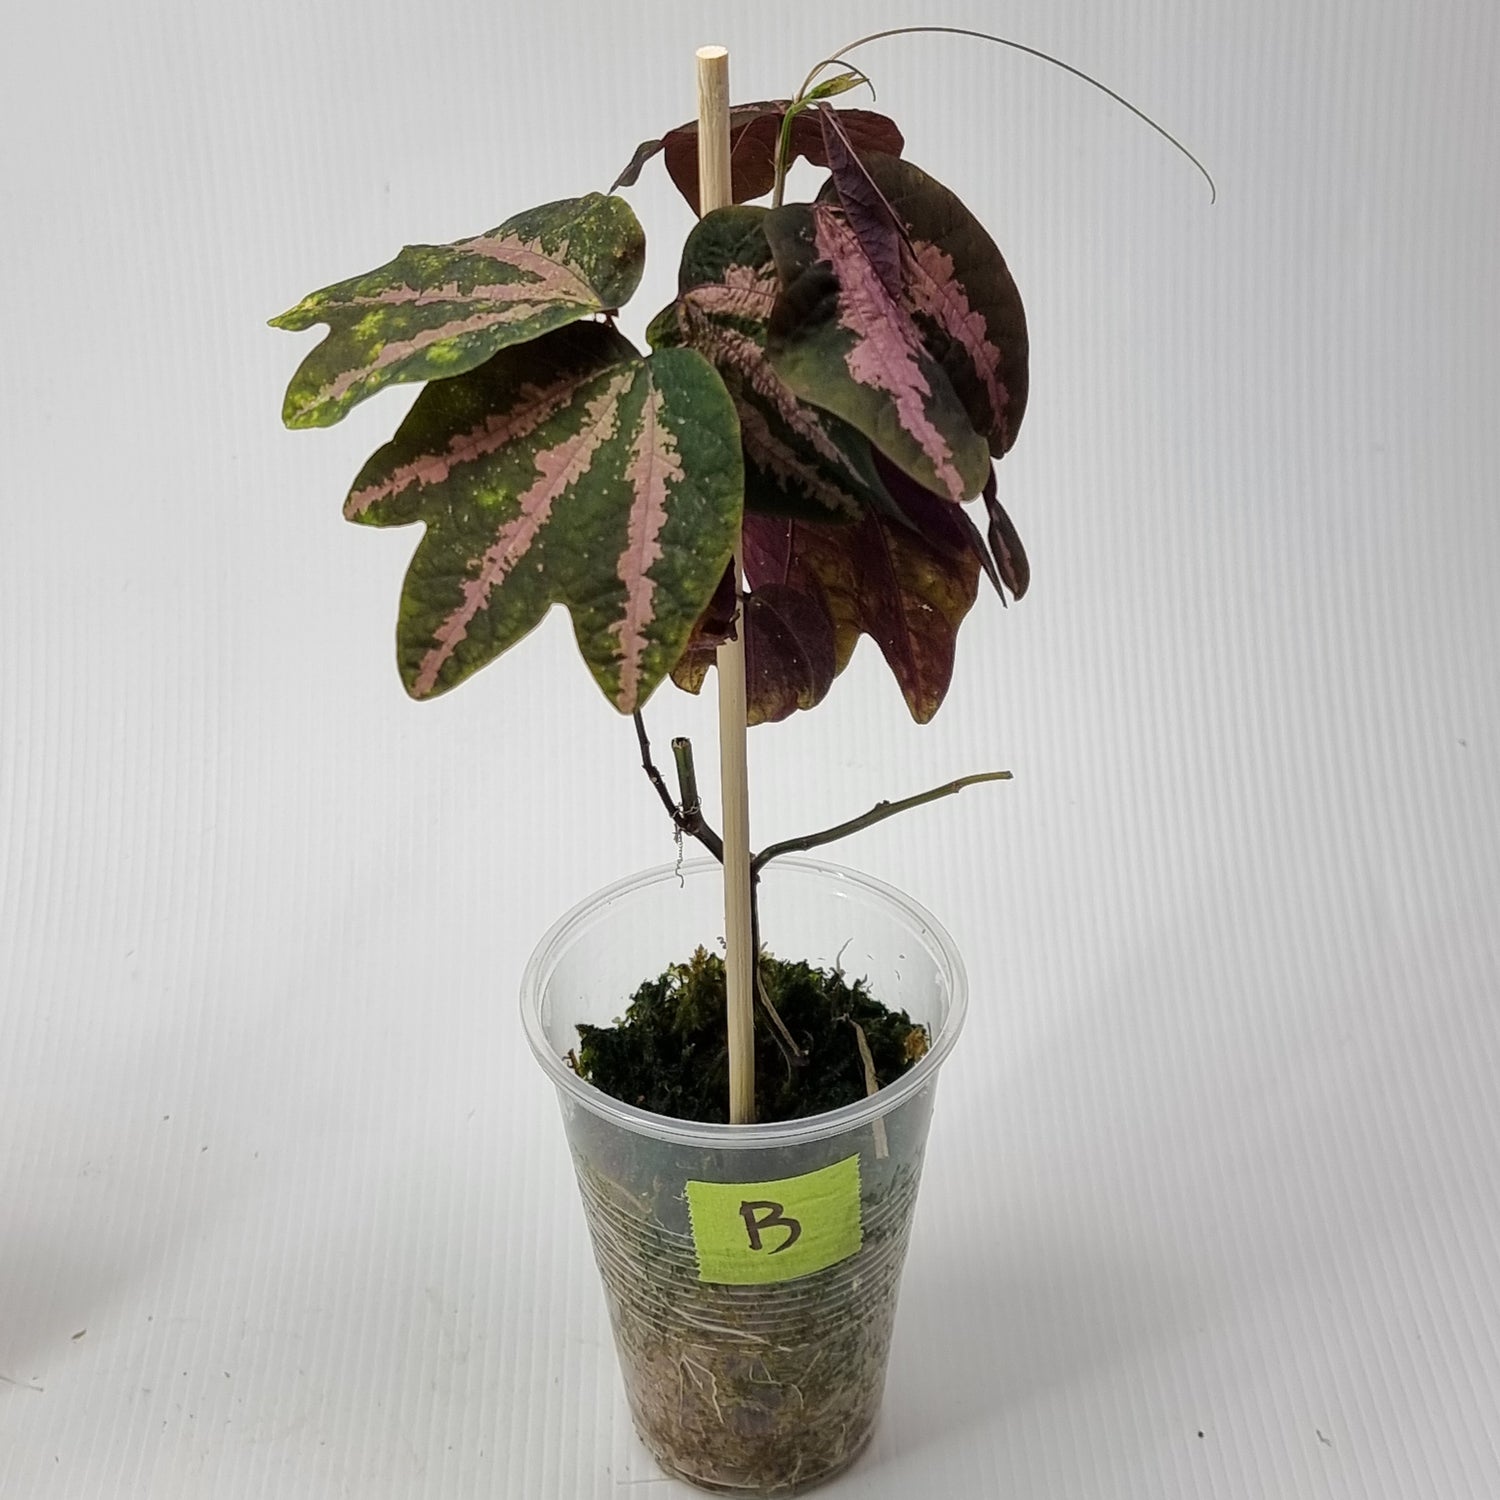 rare Passiflora trifasciata AKA Duckfeet plant for sale in Perth Australia